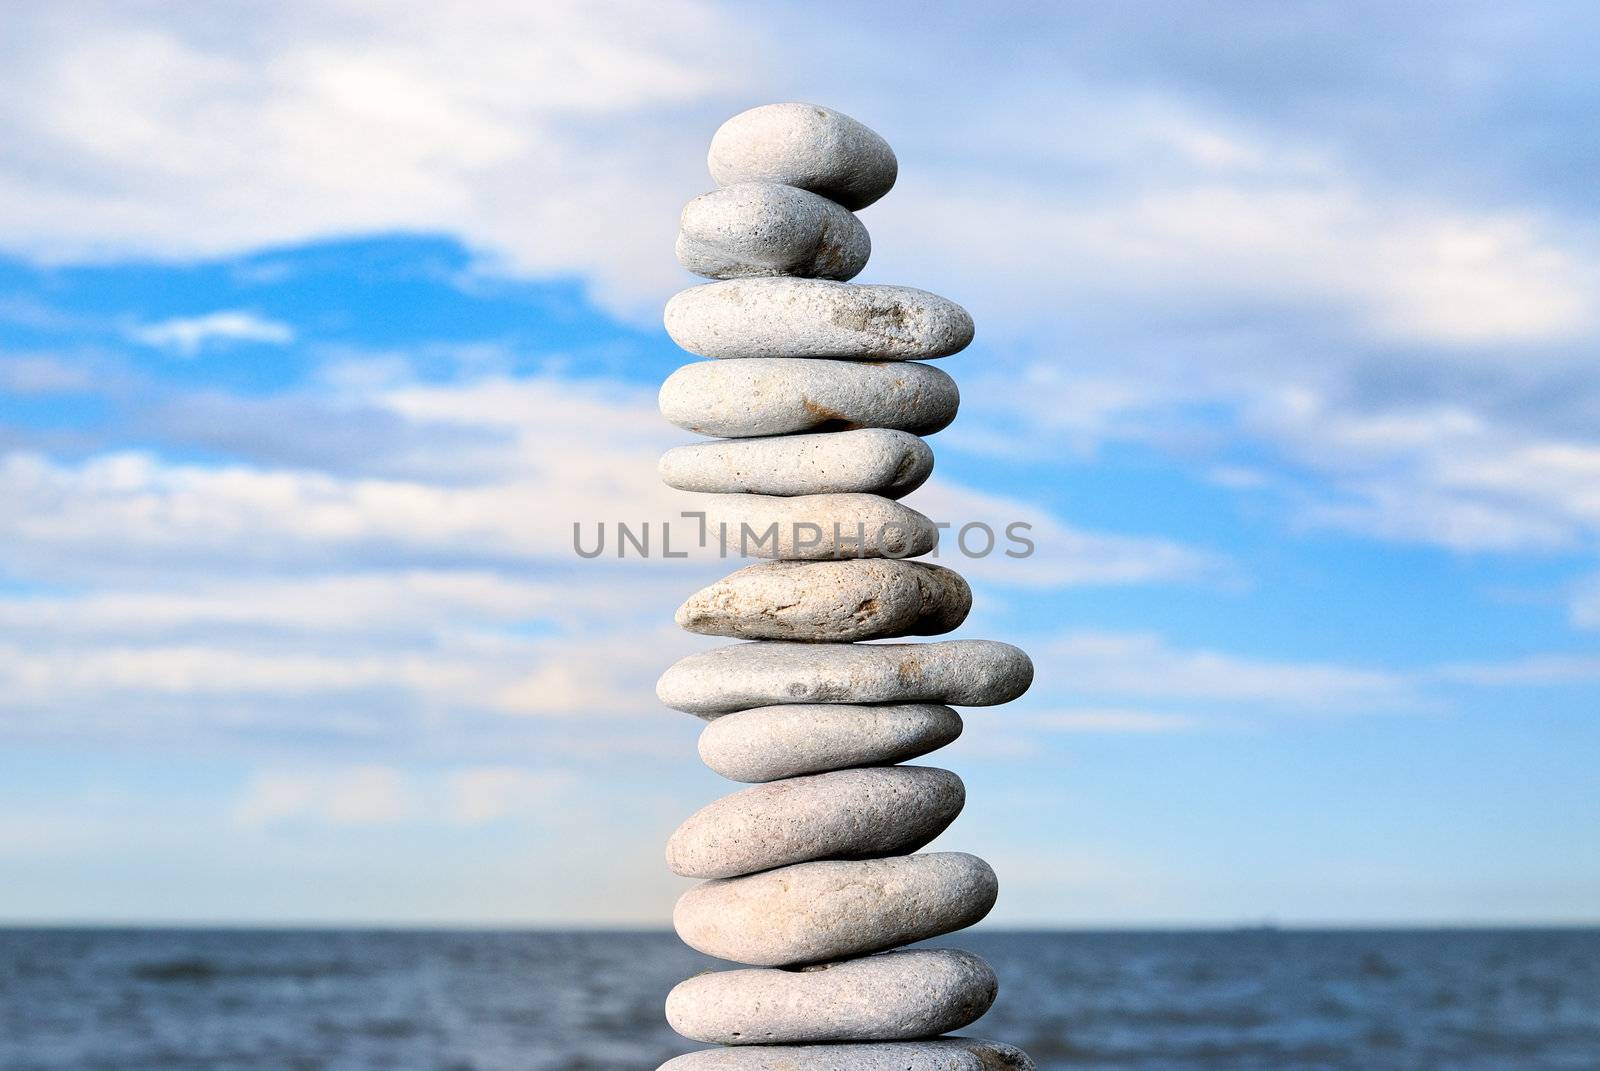 Grey stone tower on a beach by styf22